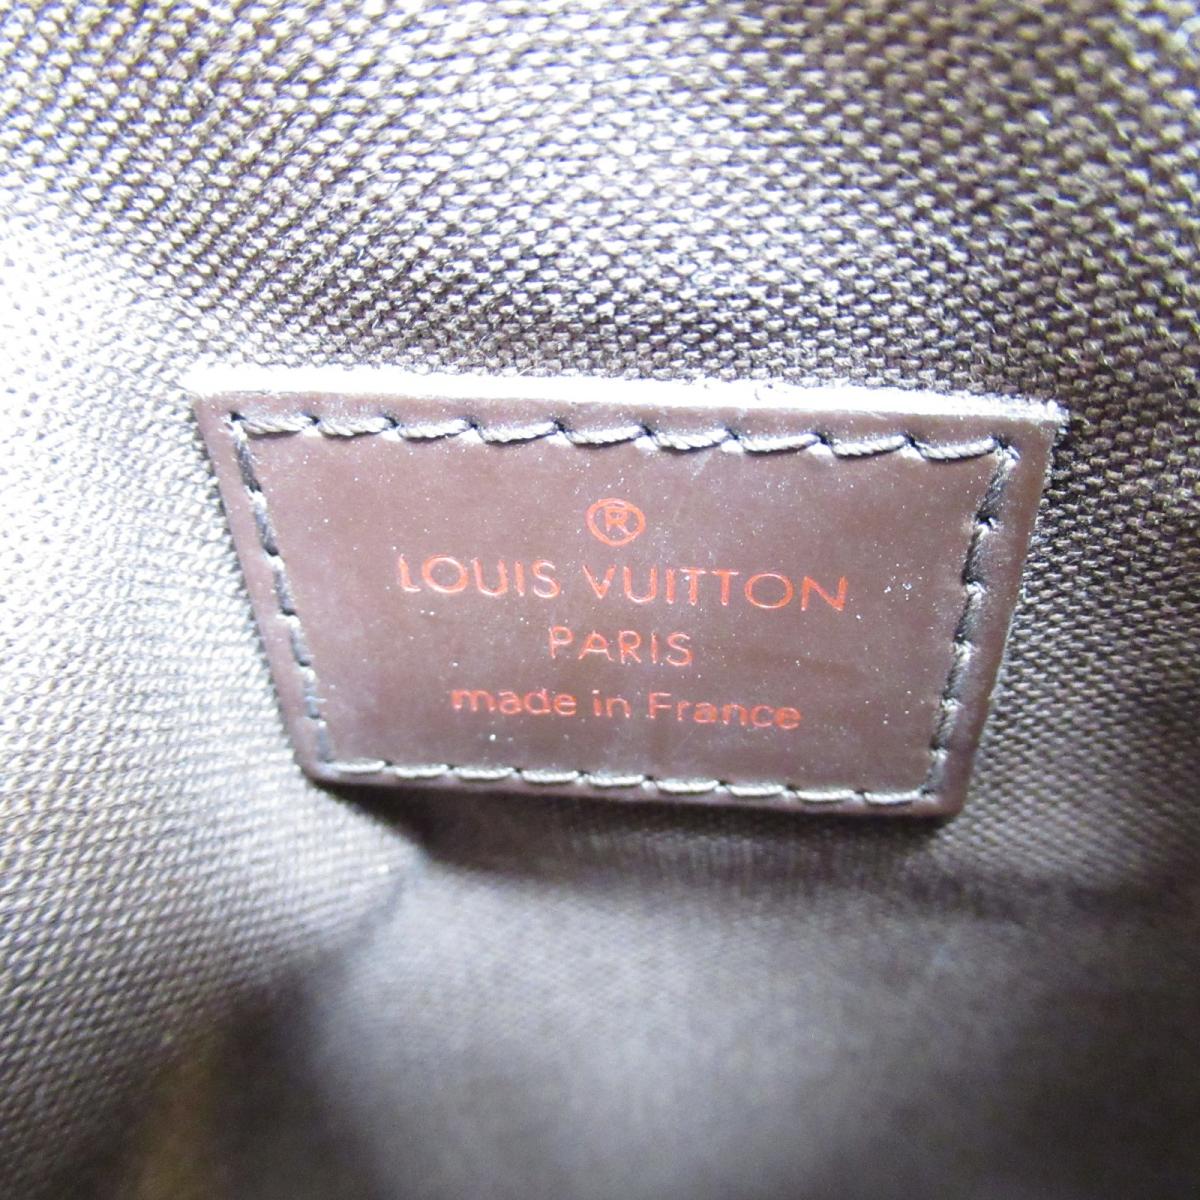 LOUIS VUITTON POCHETTE MELVILLE SHOULDER BAG DAMIER EBENE N51127